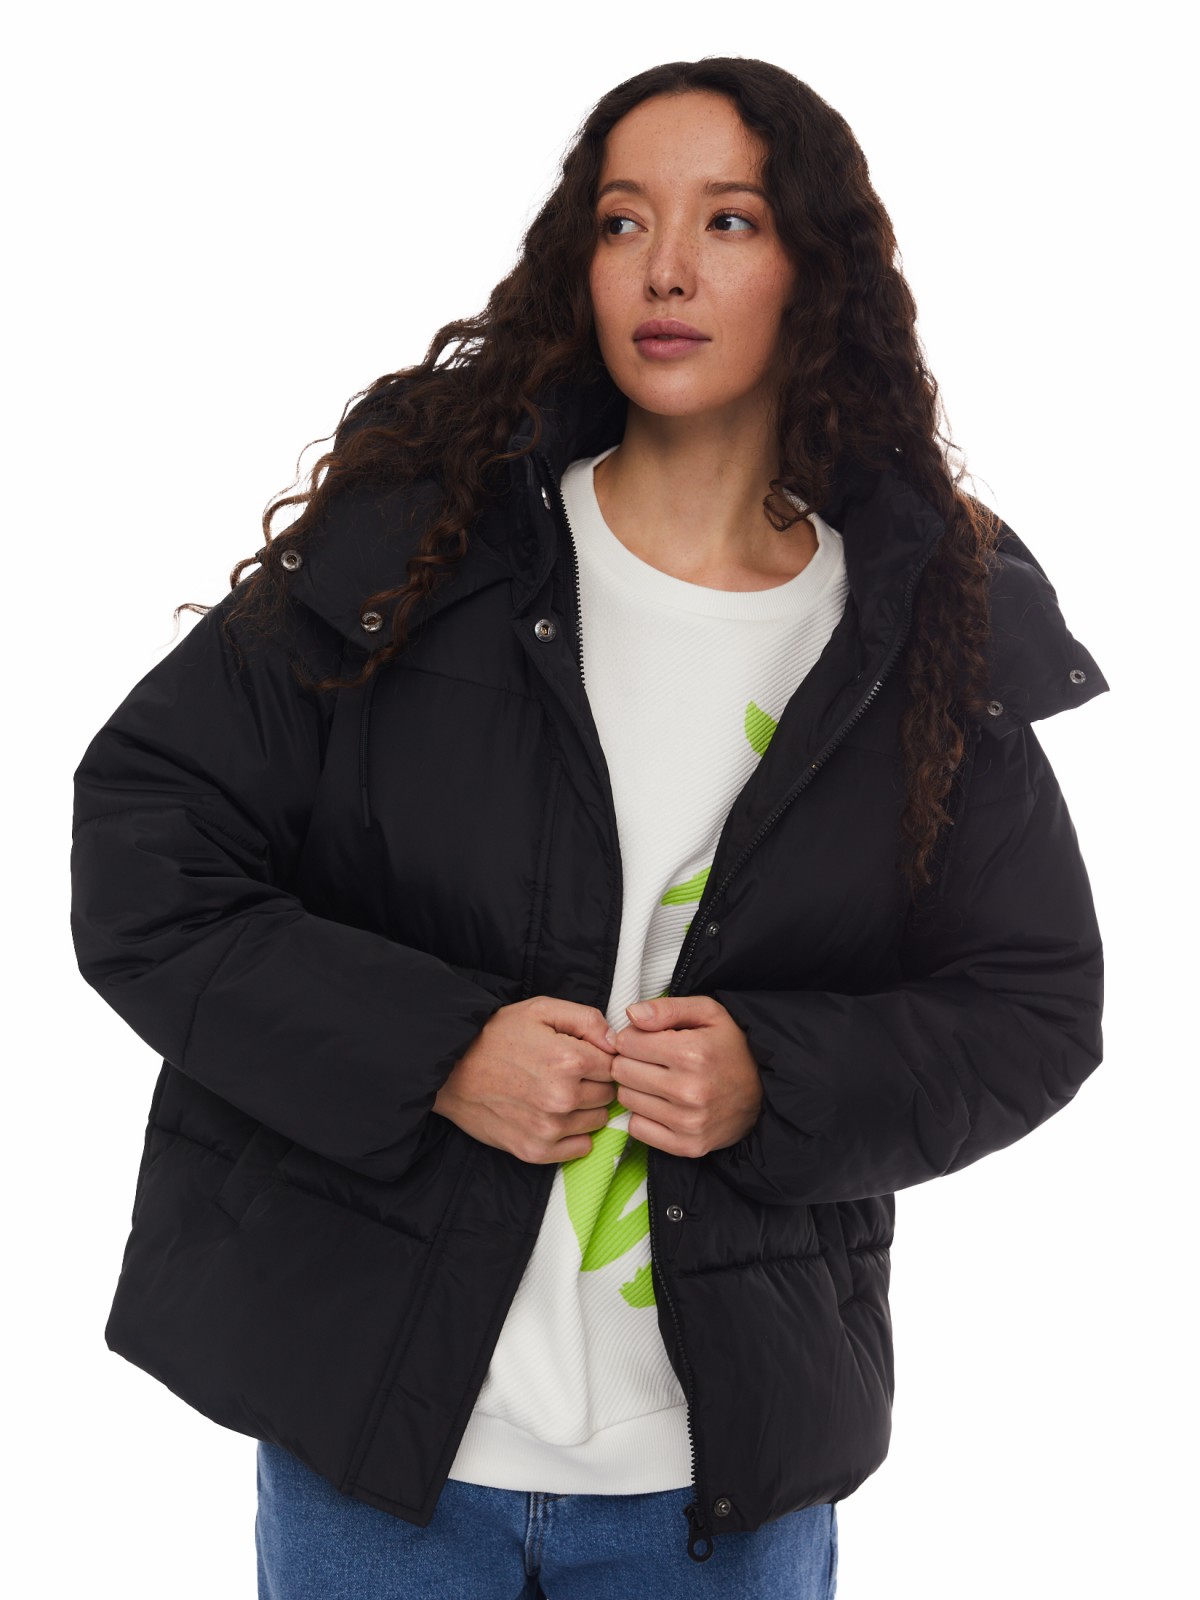 Тёплая укороченная дутая куртка с капюшоном zolla 024125112434, цвет черный, размер XS